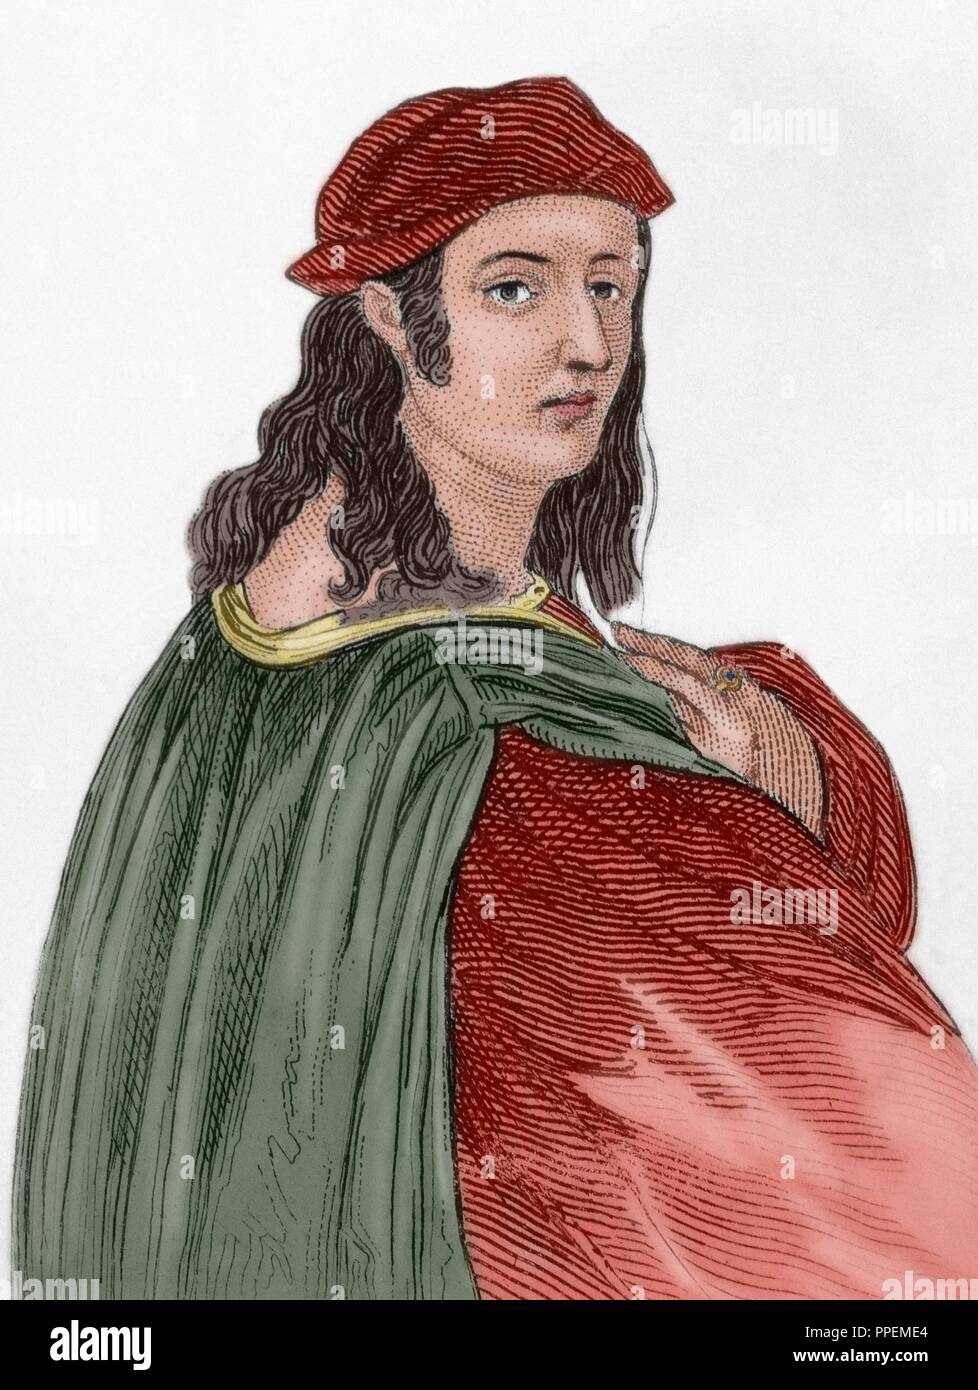 Rafael. Raffaello Santi o Sanzio (Urbino, 1483-Roma, 1520). Pintor y arquitecto  italiano del Renacimiento. Grabado coloreado Stock Photo - Alamy